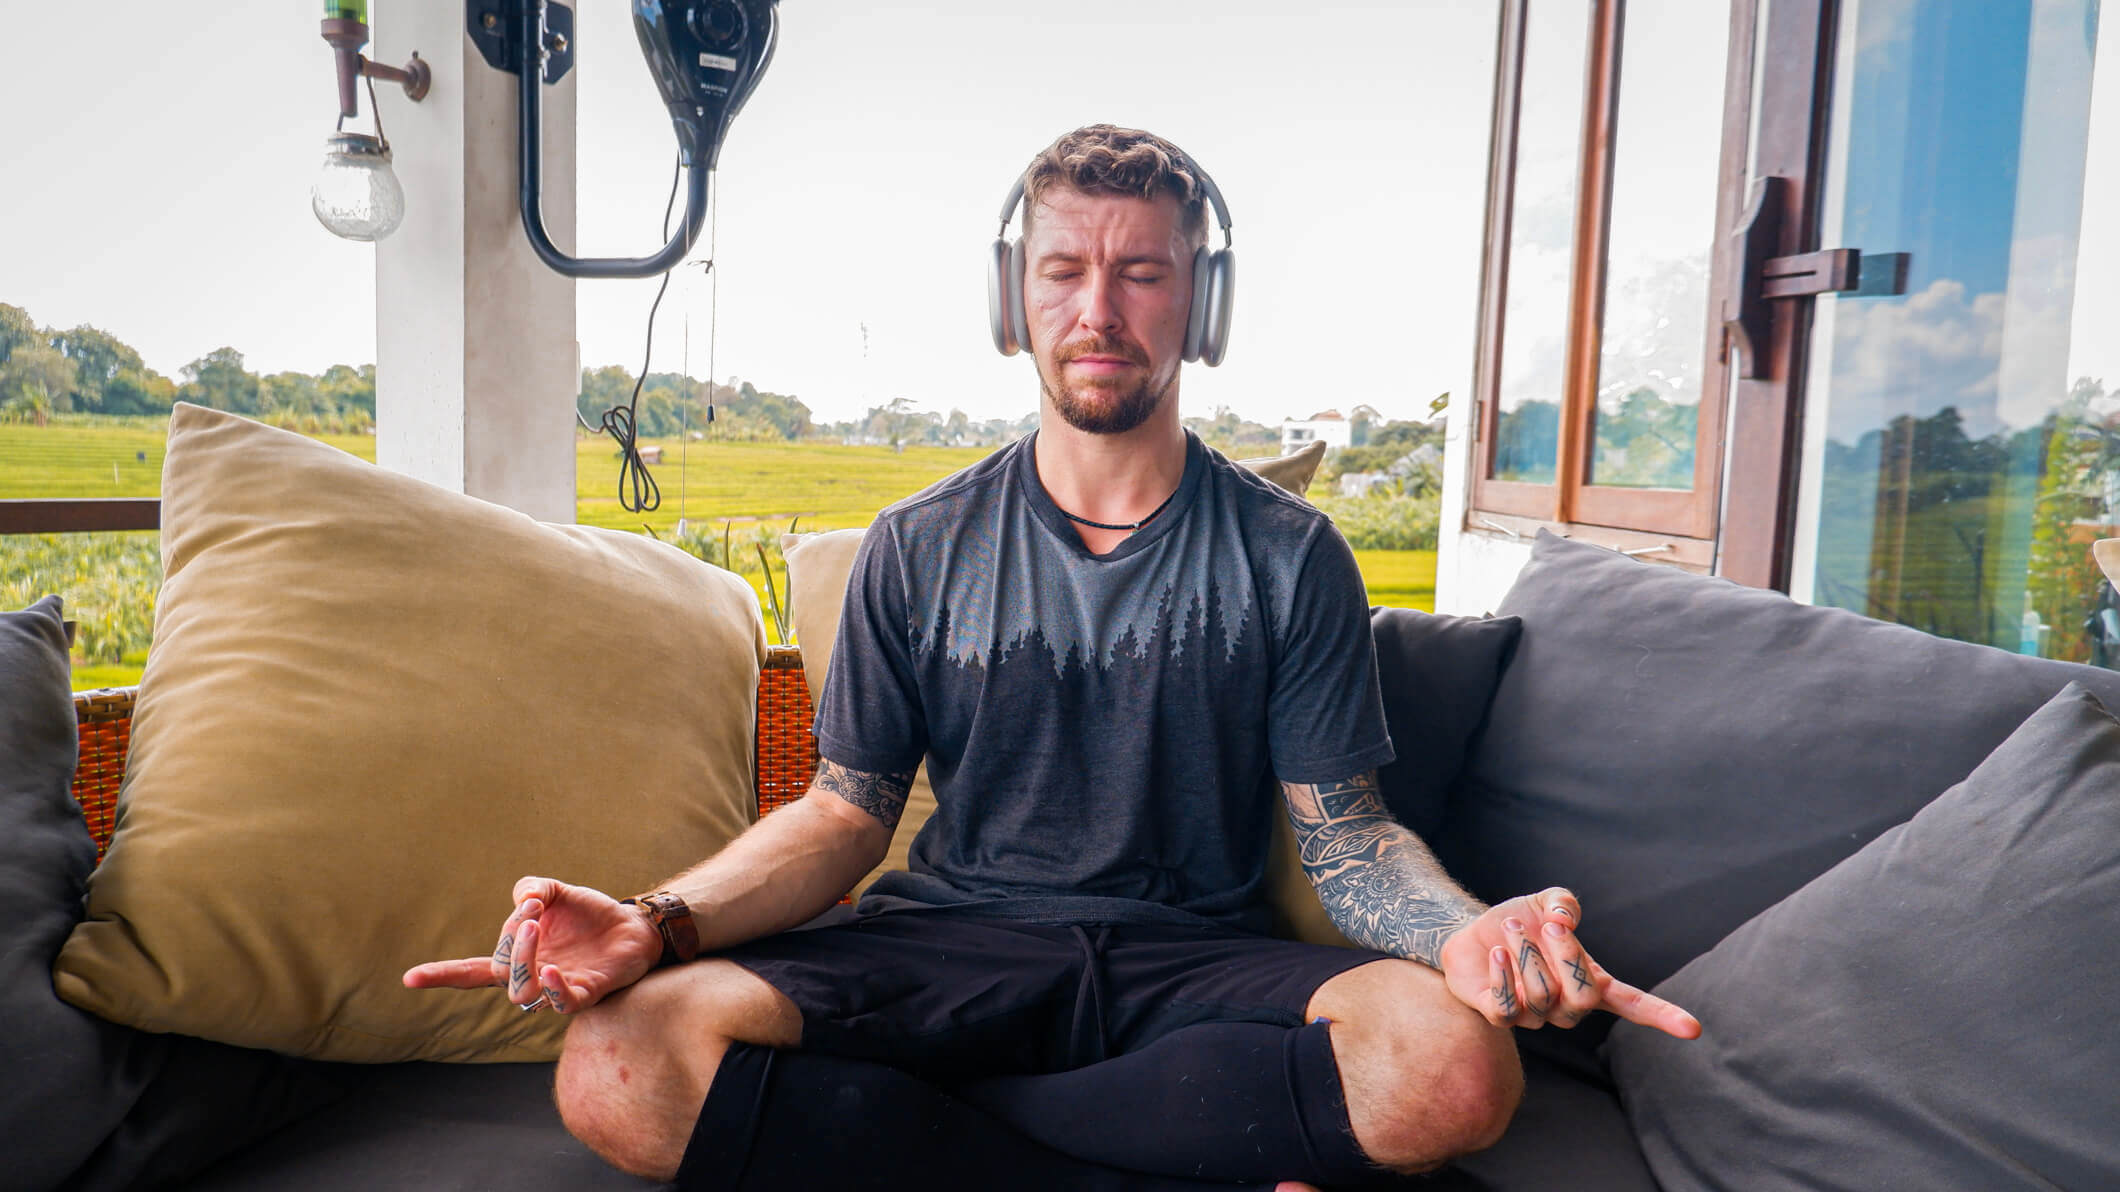 Will Hatton meditating with headphones on